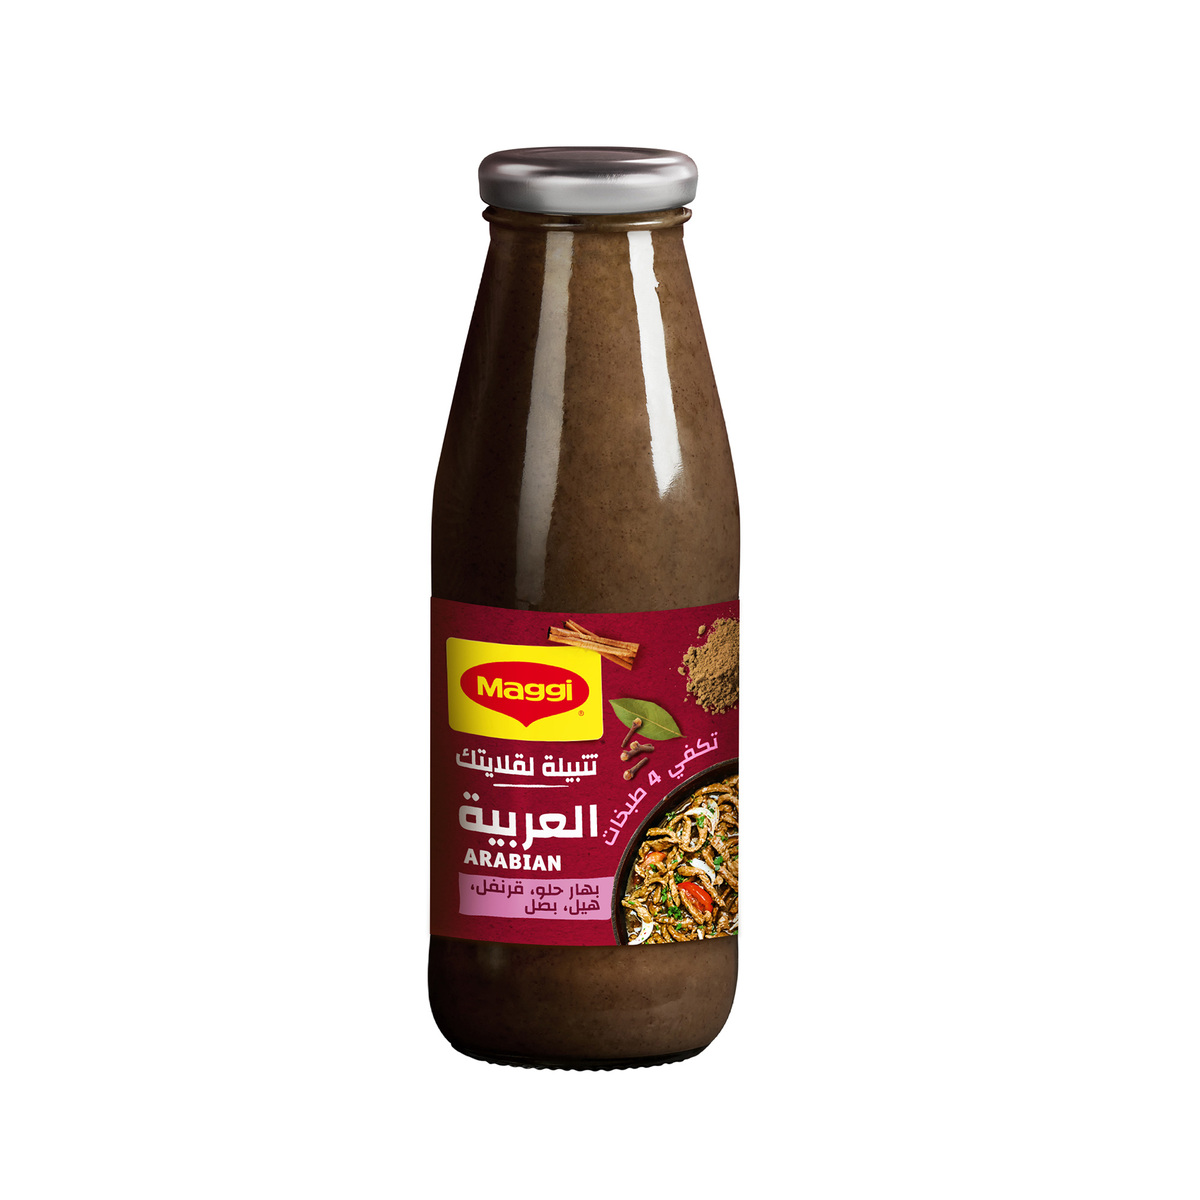 Maggi Arabian Cooking Sauce 280 g